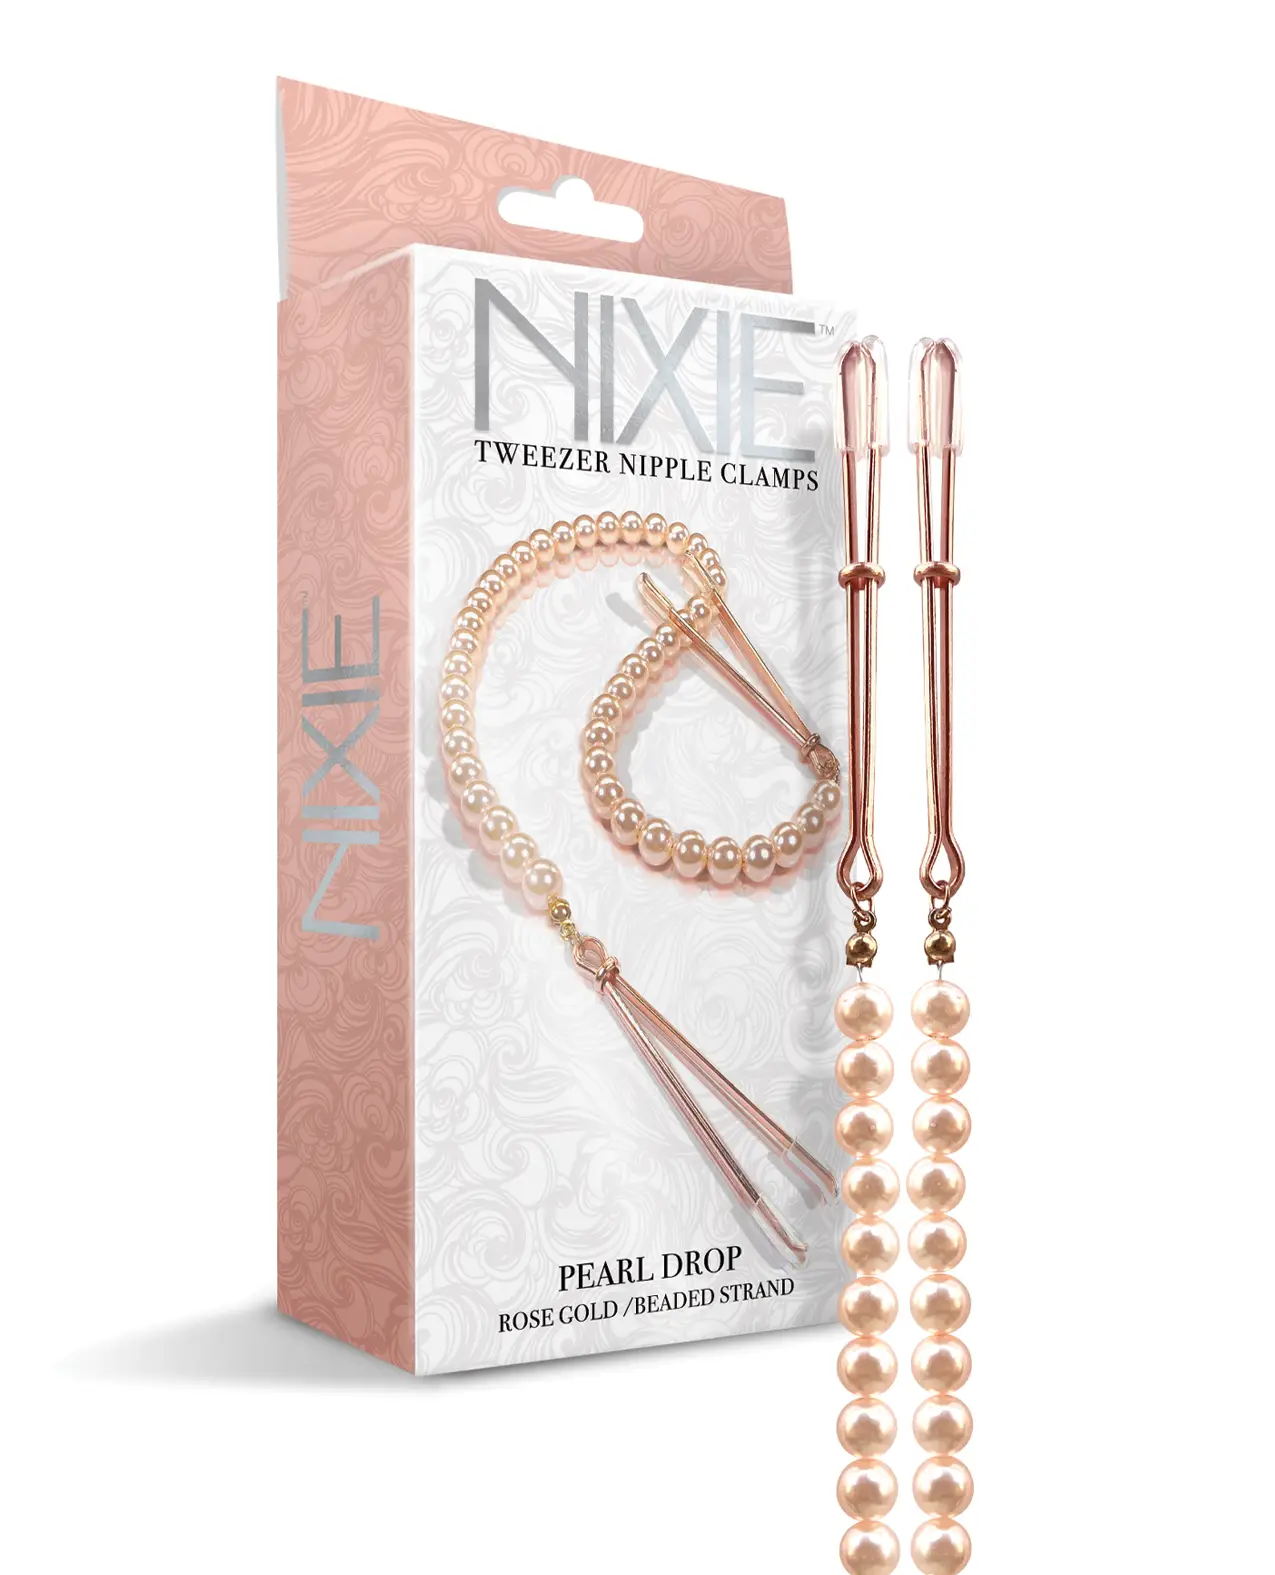 Nixie Pearl Drop Tweezer Nipple Clamps in Rose Gold